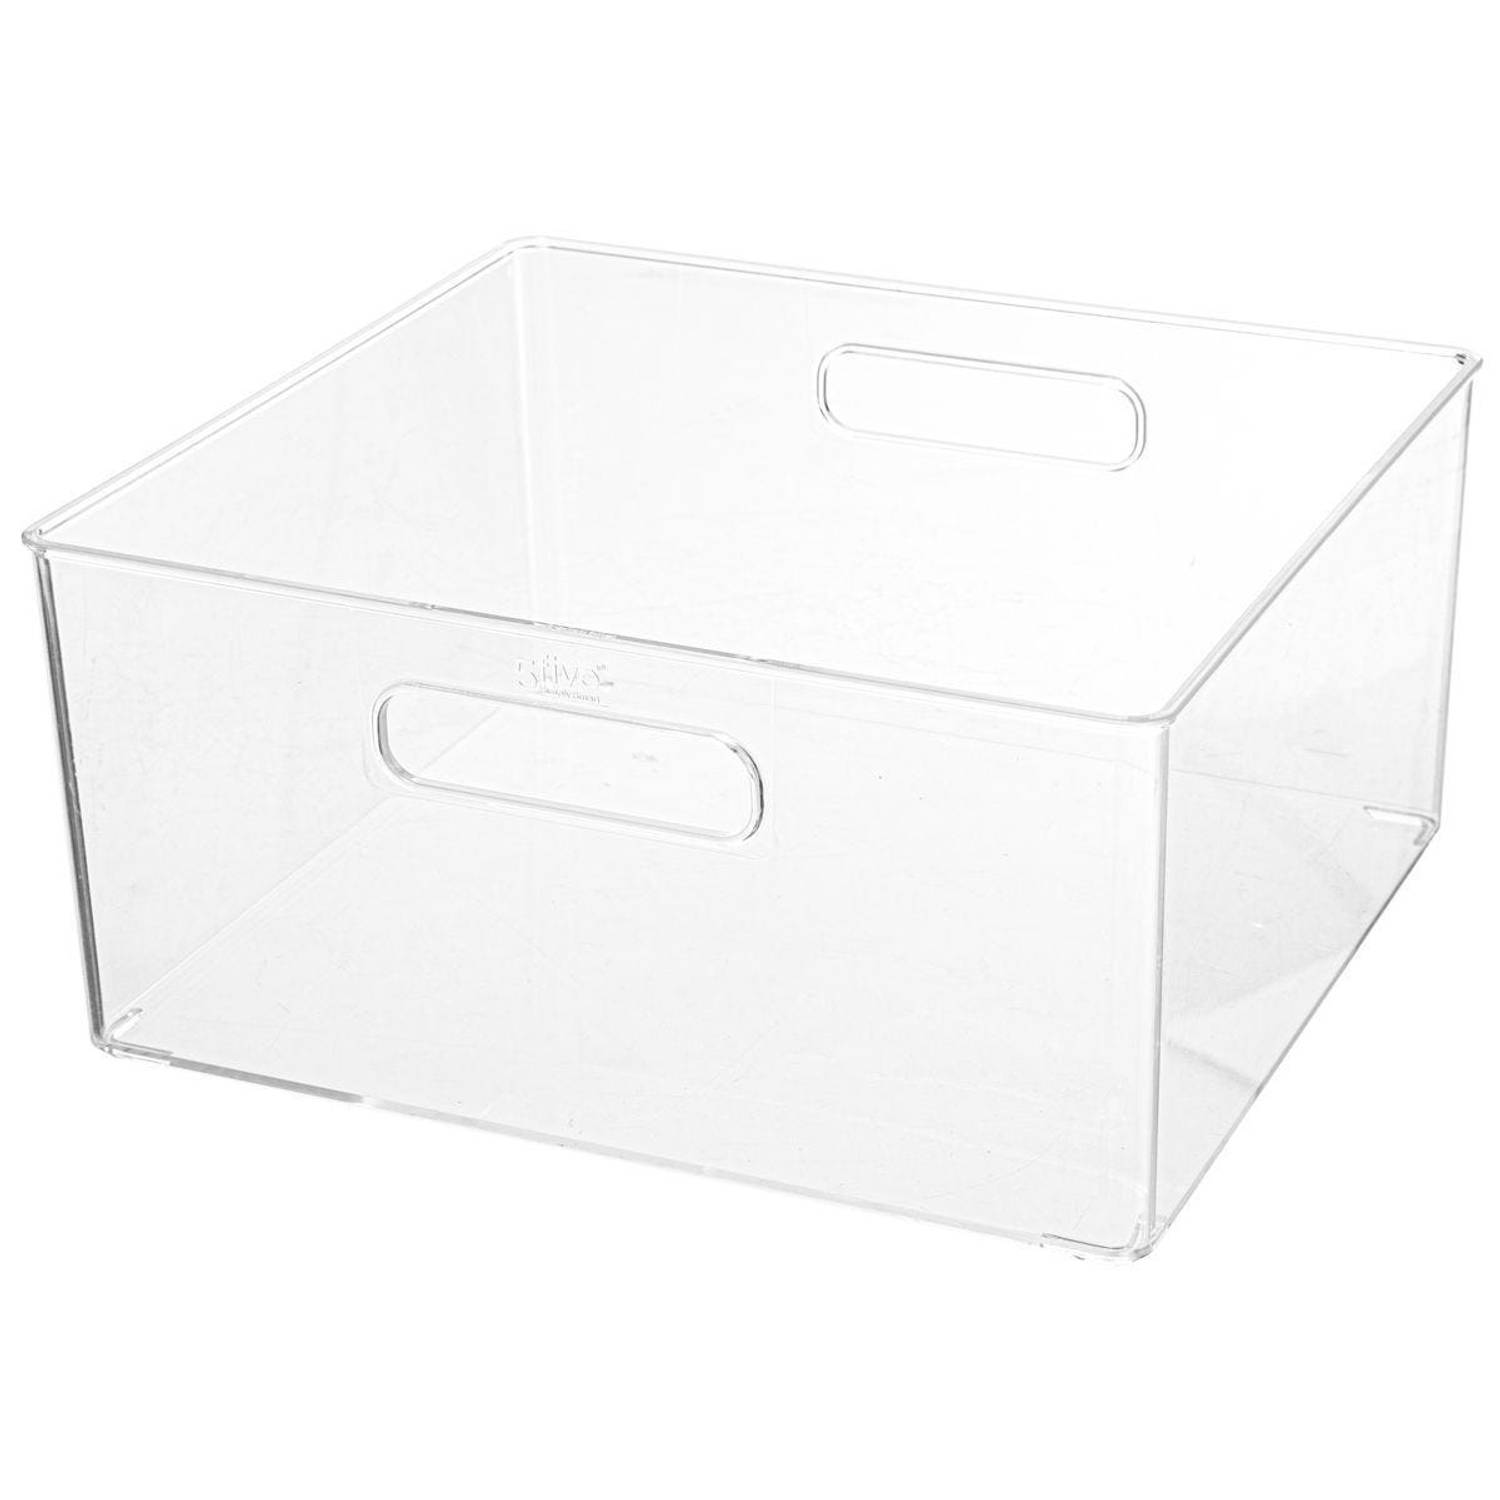 Creme potjes/flesjes/make-up houder/box vierkant 31 x 15 cm van kunststof - Opbergbox